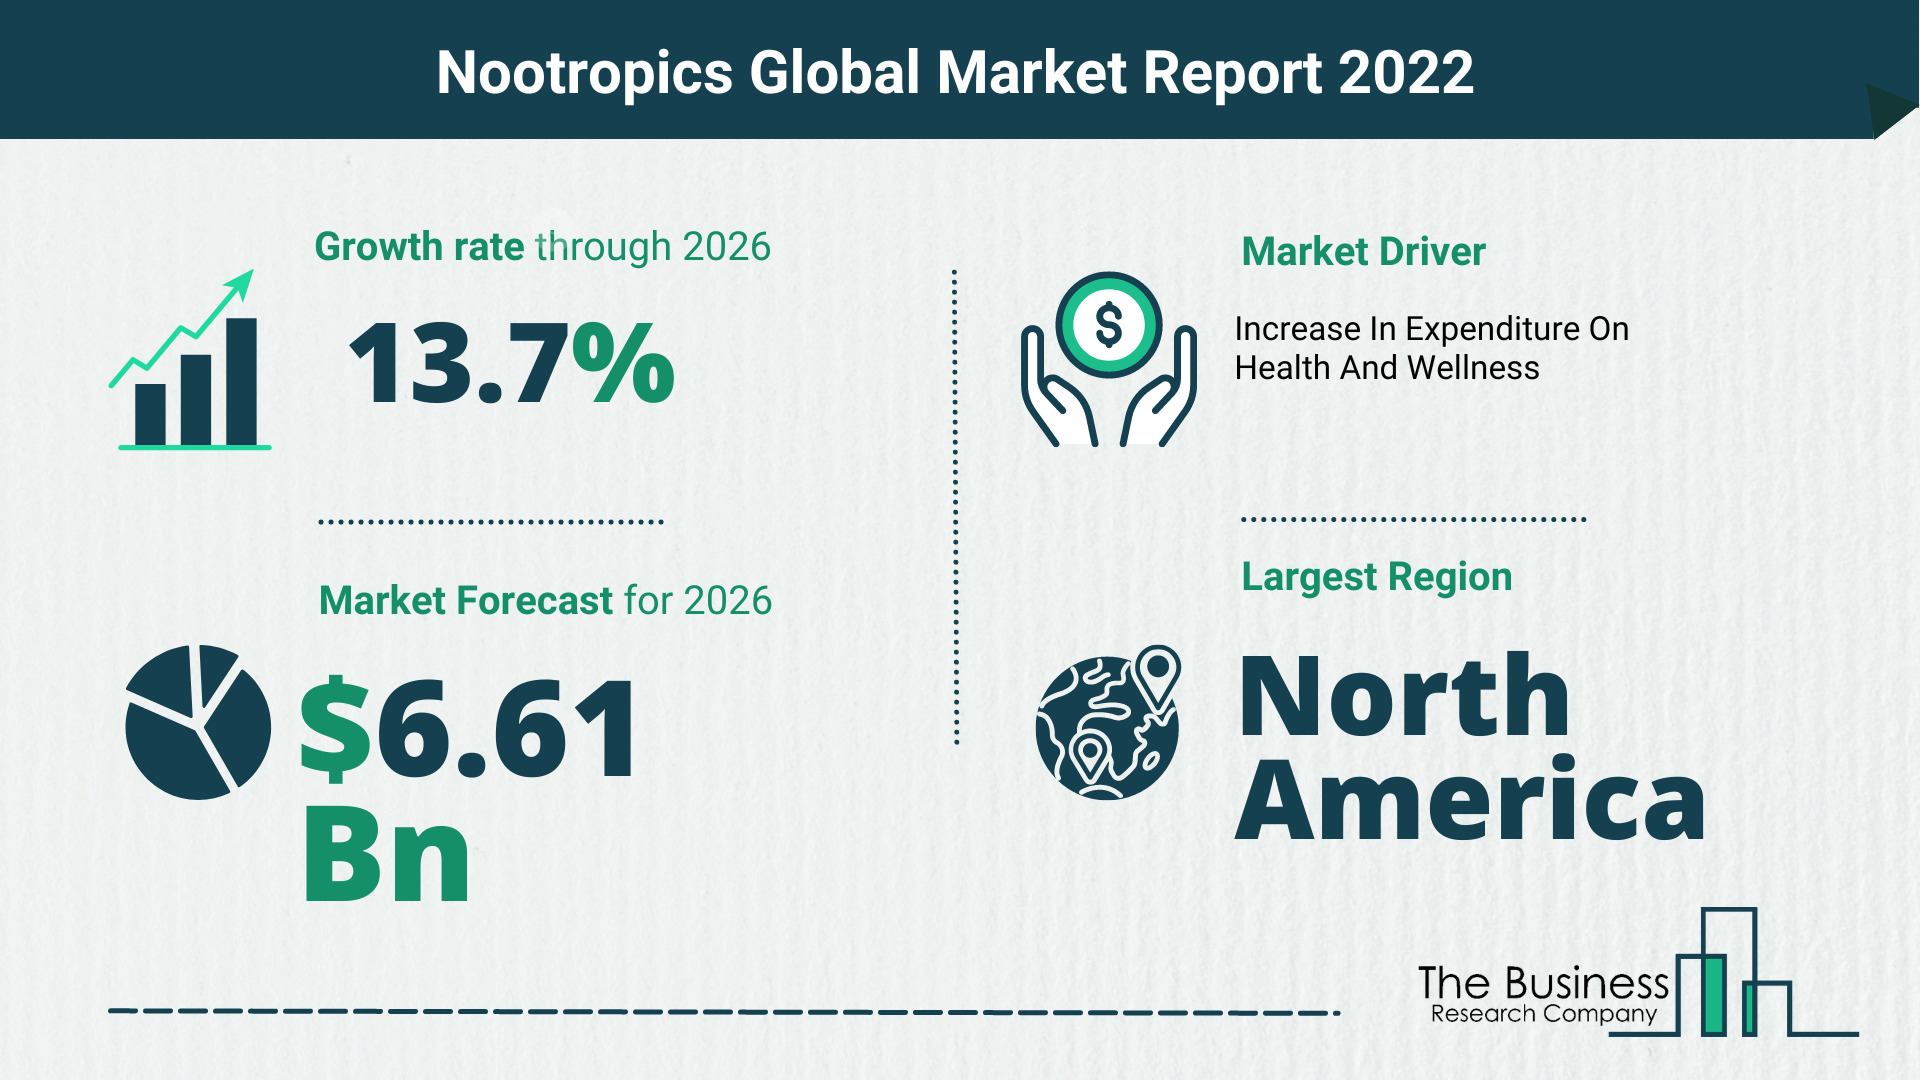 Global Nootropics Market Size